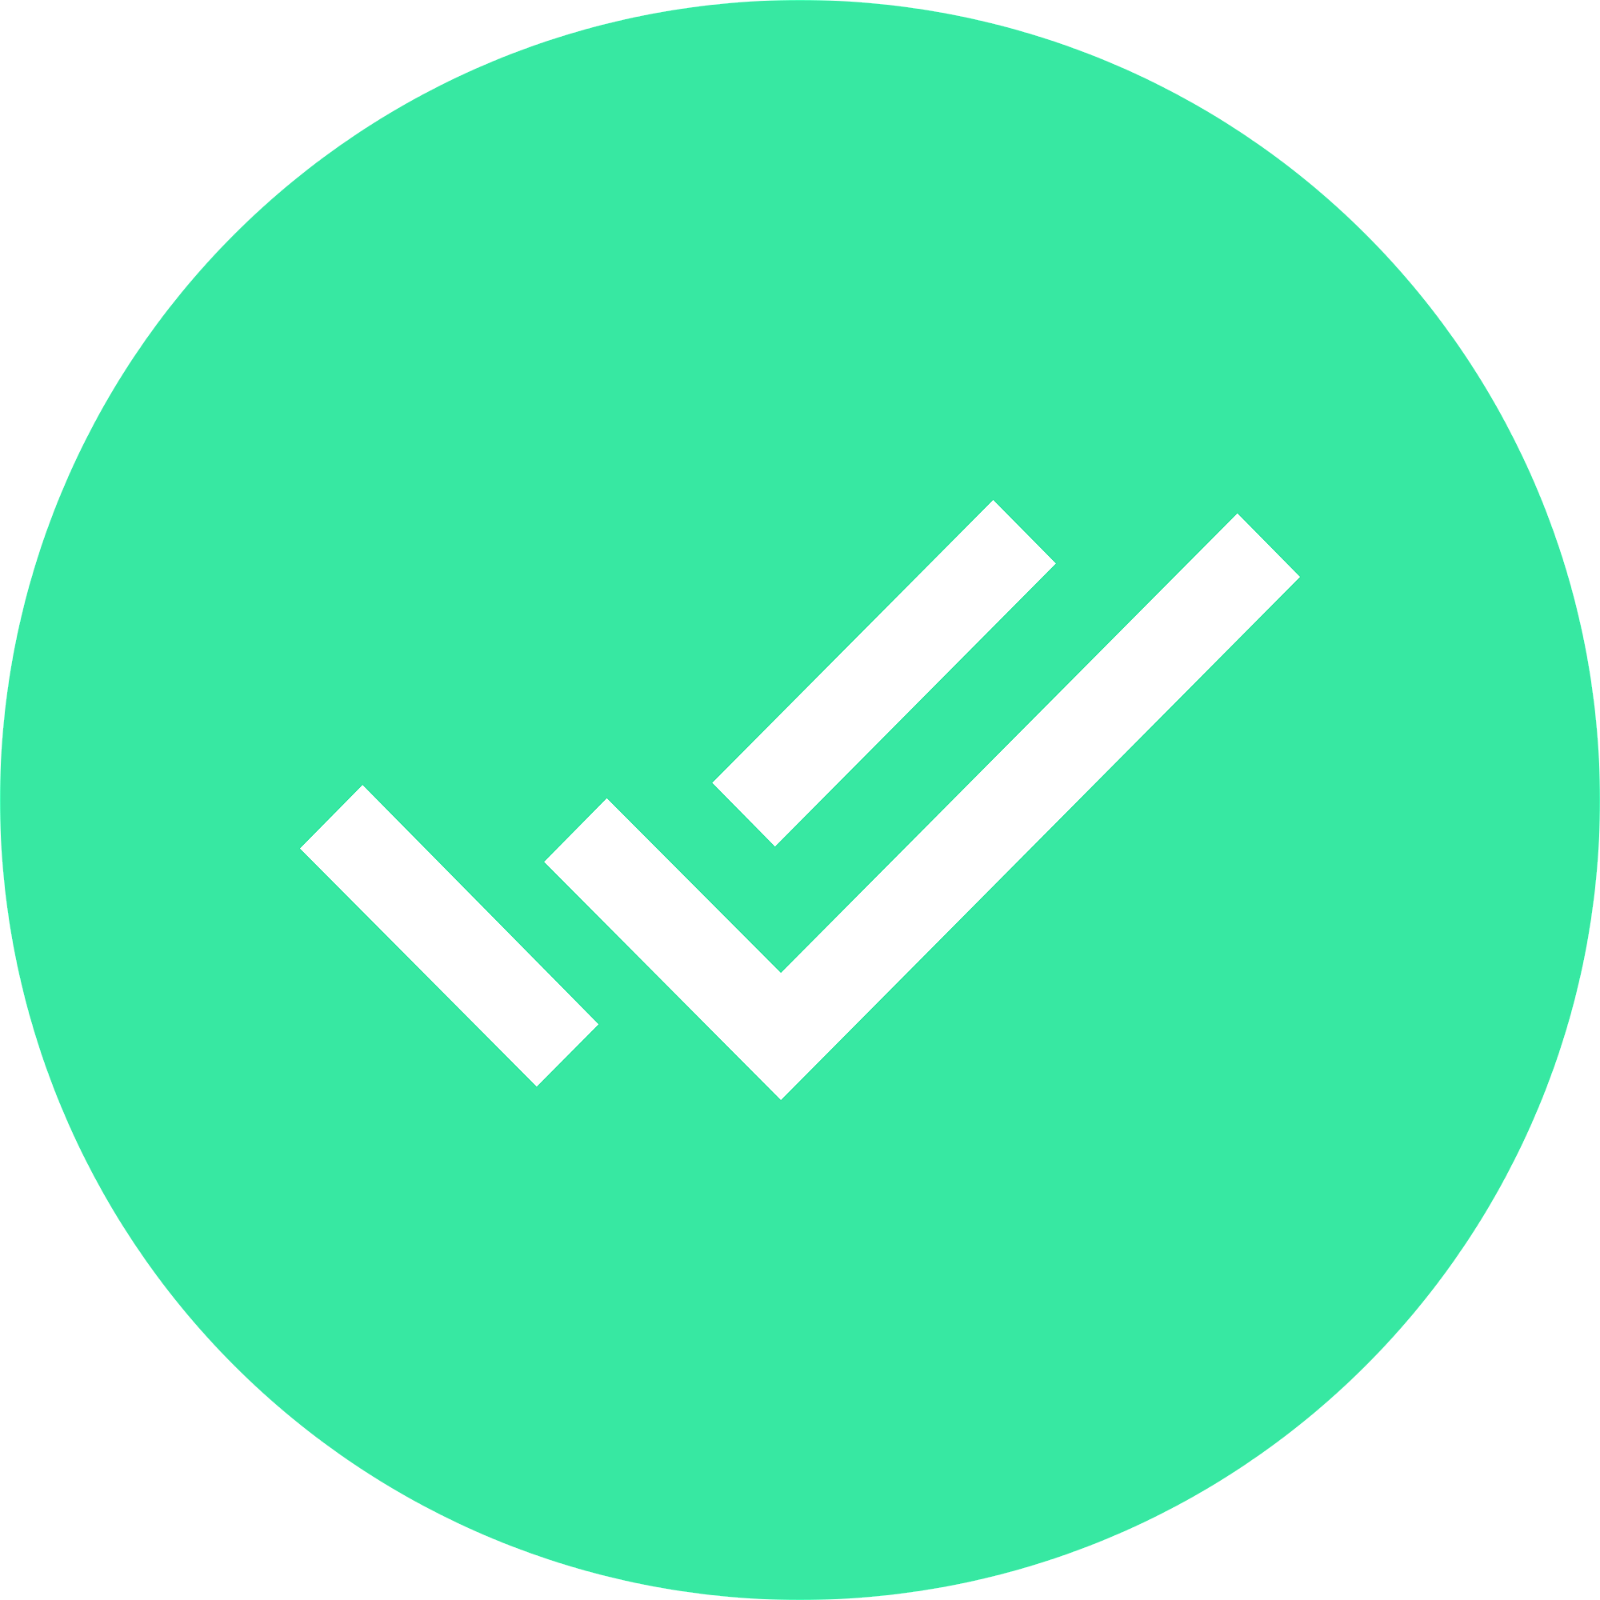 Verify Logo